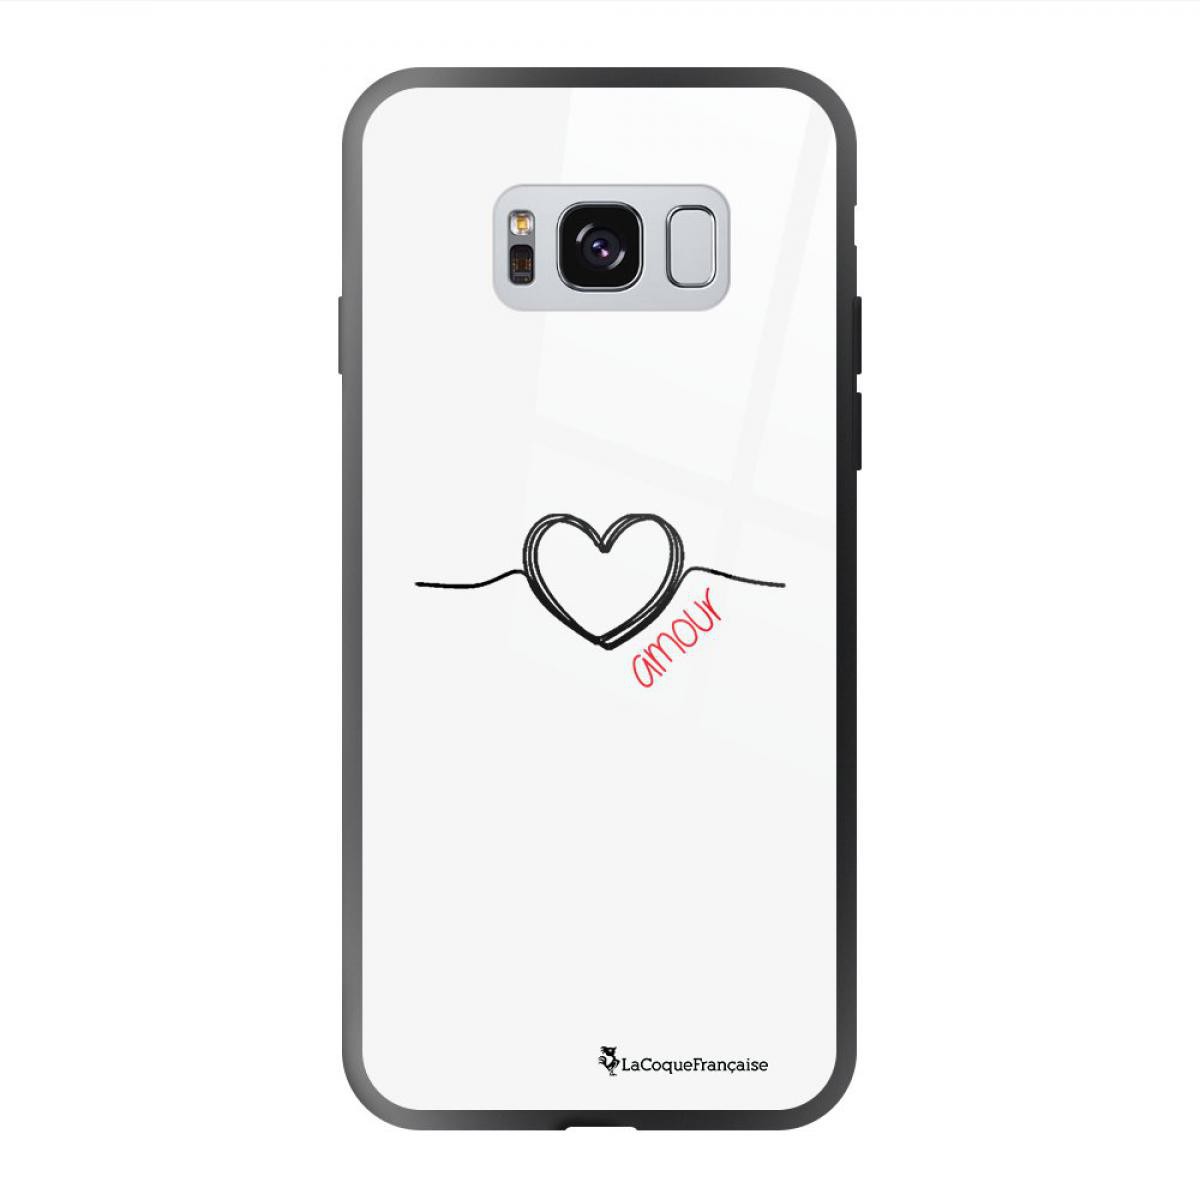 La Coque Francaise - Coque Samsung Galaxy S8 soft touch noir effet glossy Coeur Noir Amour Design La Coque Francaise - Coque, étui smartphone